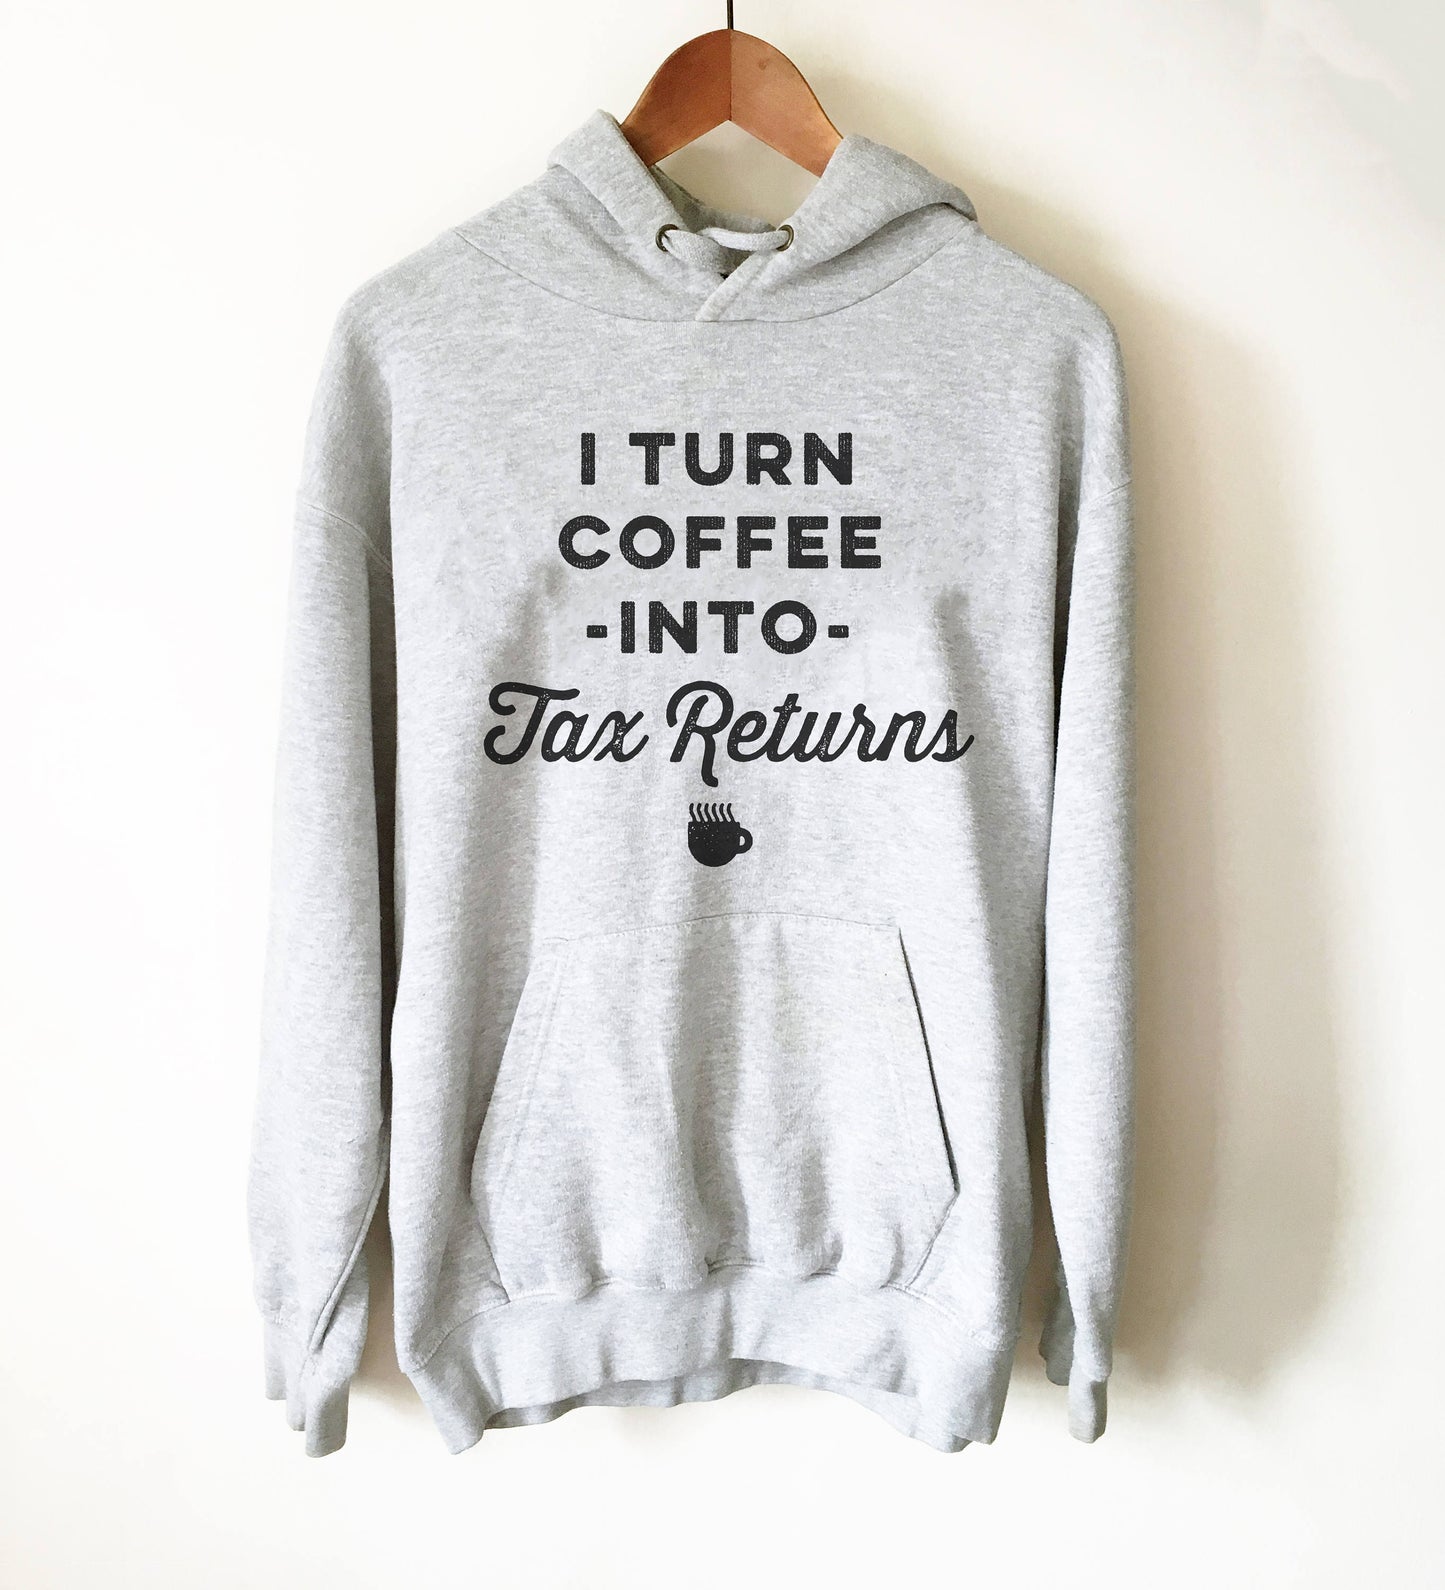 I Turn Coffee Into Returns Hoodie - Accountant Shirt, Accountant Gift, Accountant, Accounting Degree, Accountant Jokes